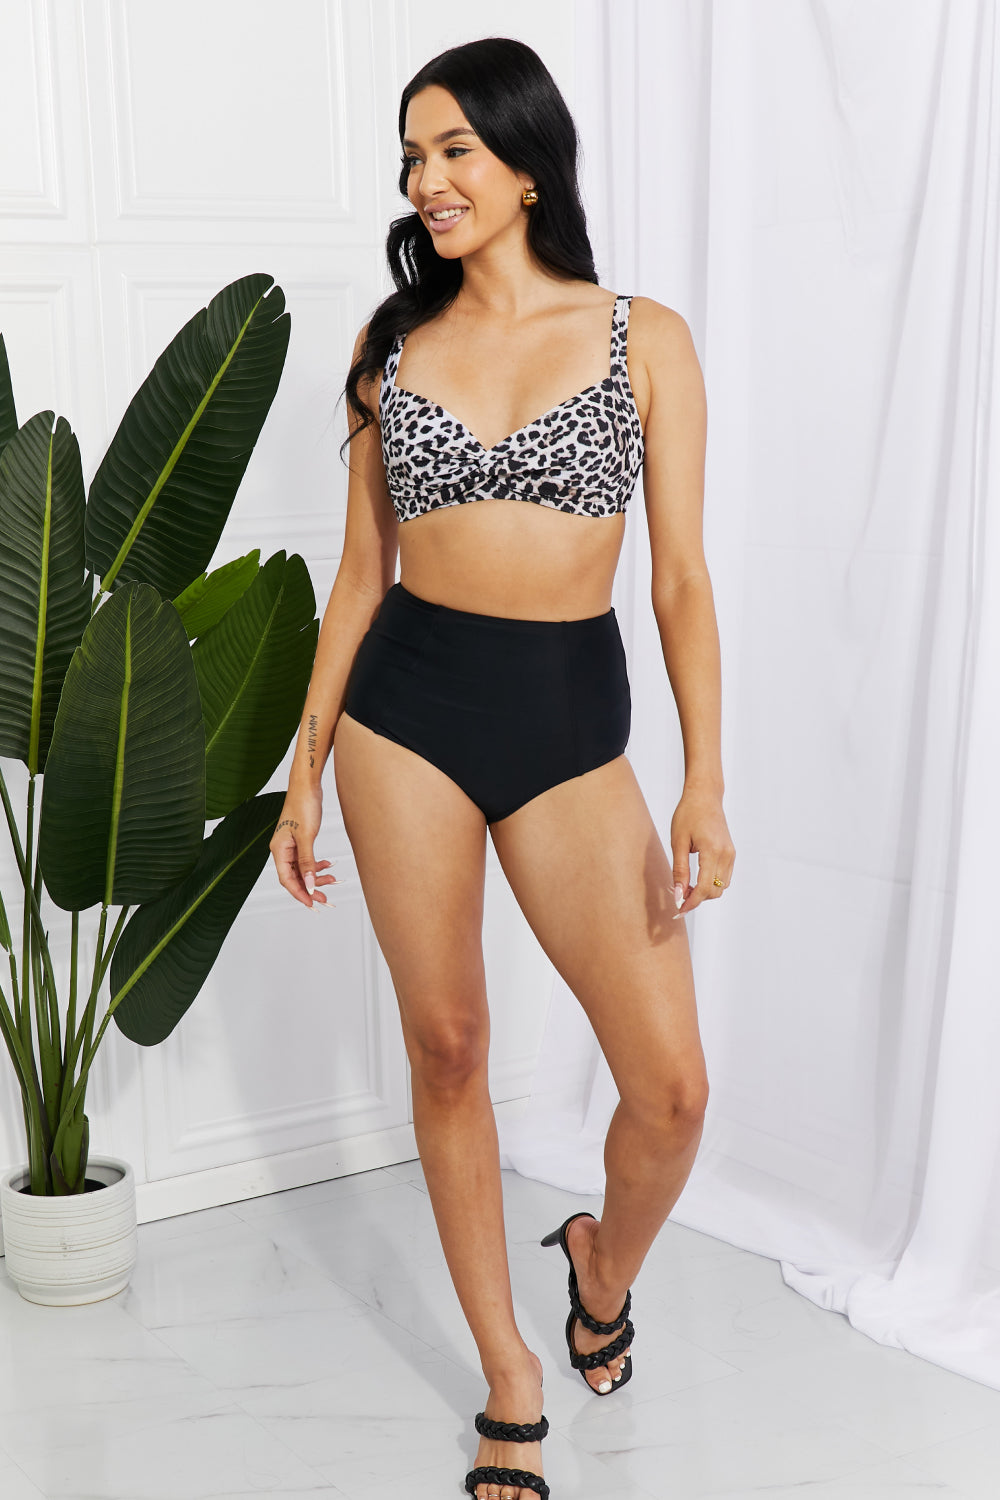 Marina West Swim Take A Dip Twist High-Rise Bikini in Leopard - Online Only